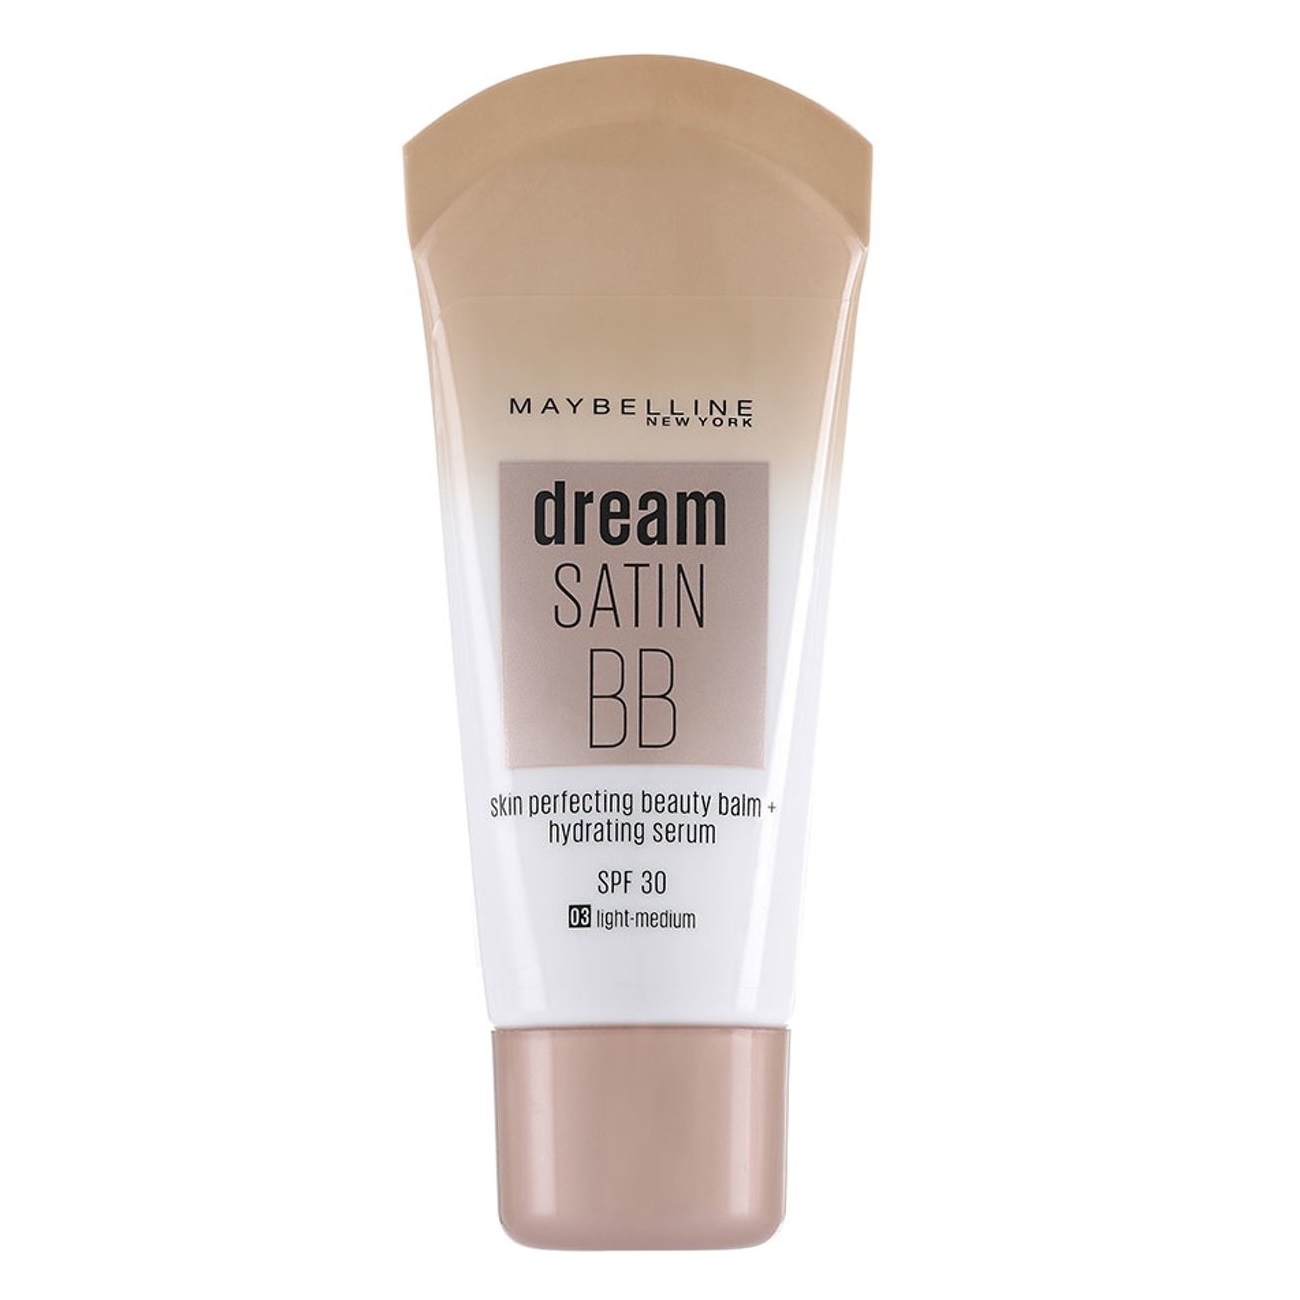 BB Cream Dream Satin, Medium, 30 ml, Maybelline